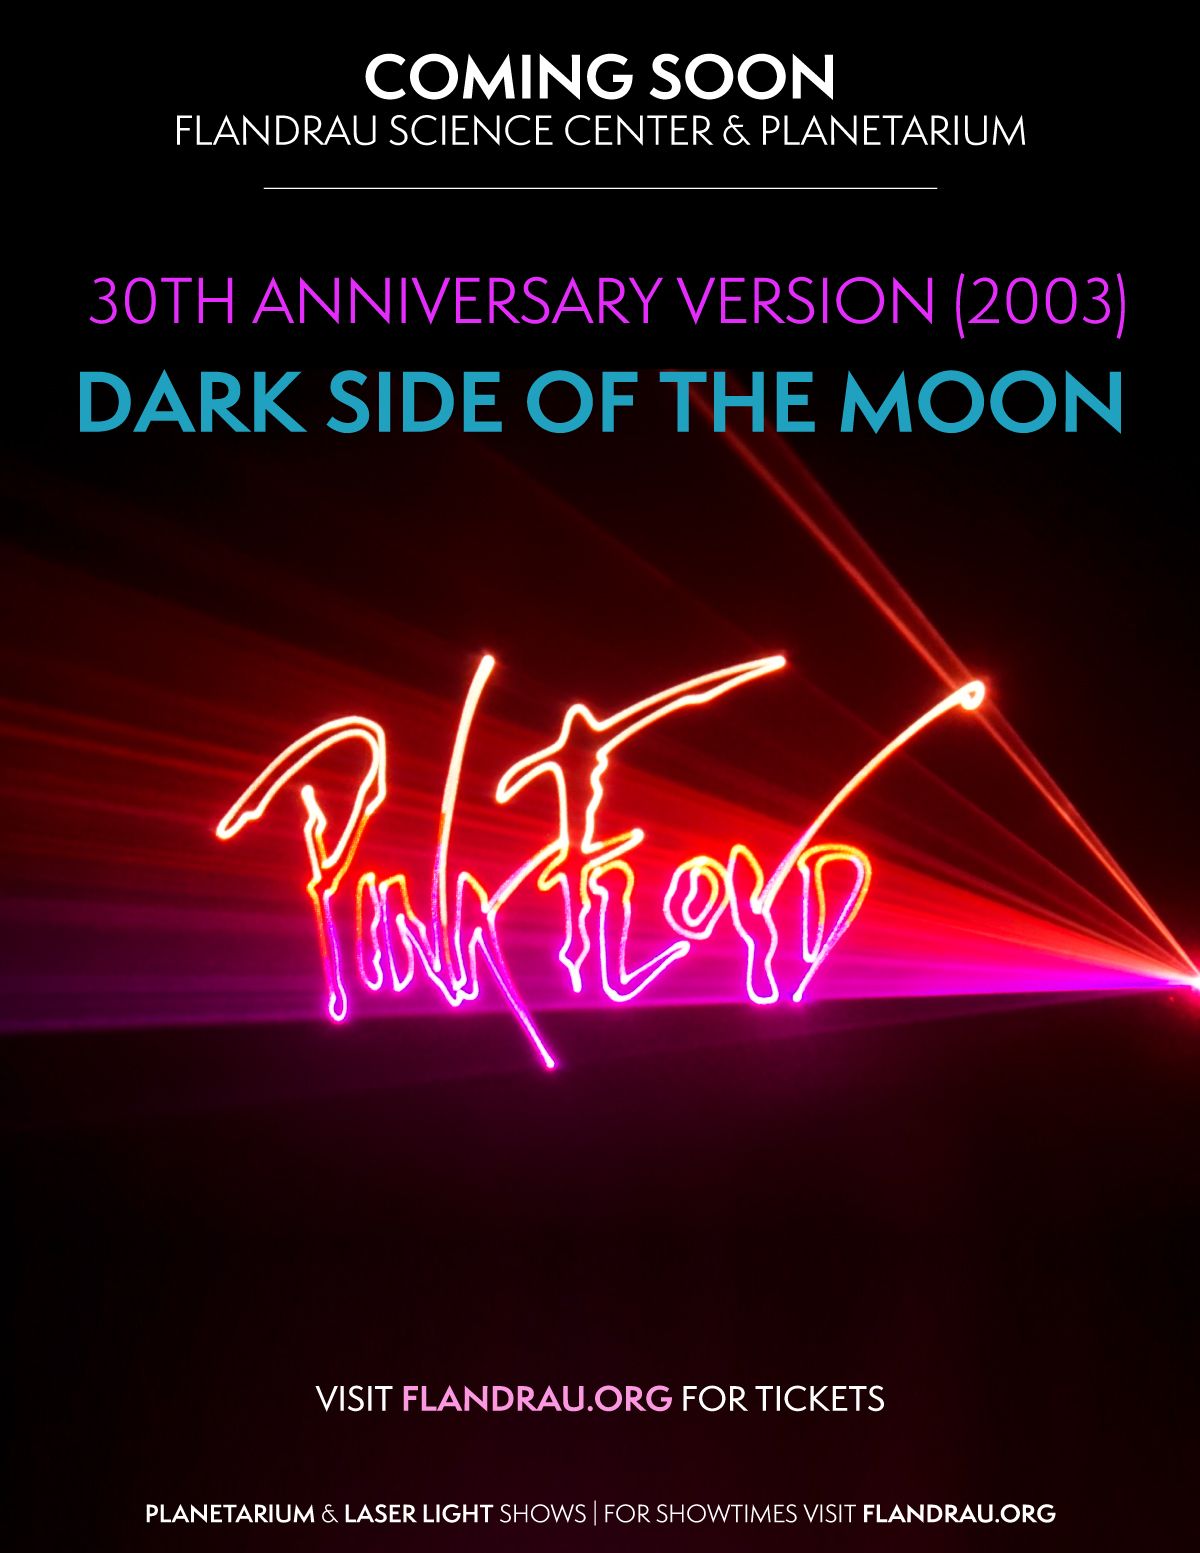 Laser Pink Floyd's "Dark Side of the Moon" (New version for Flandrau)